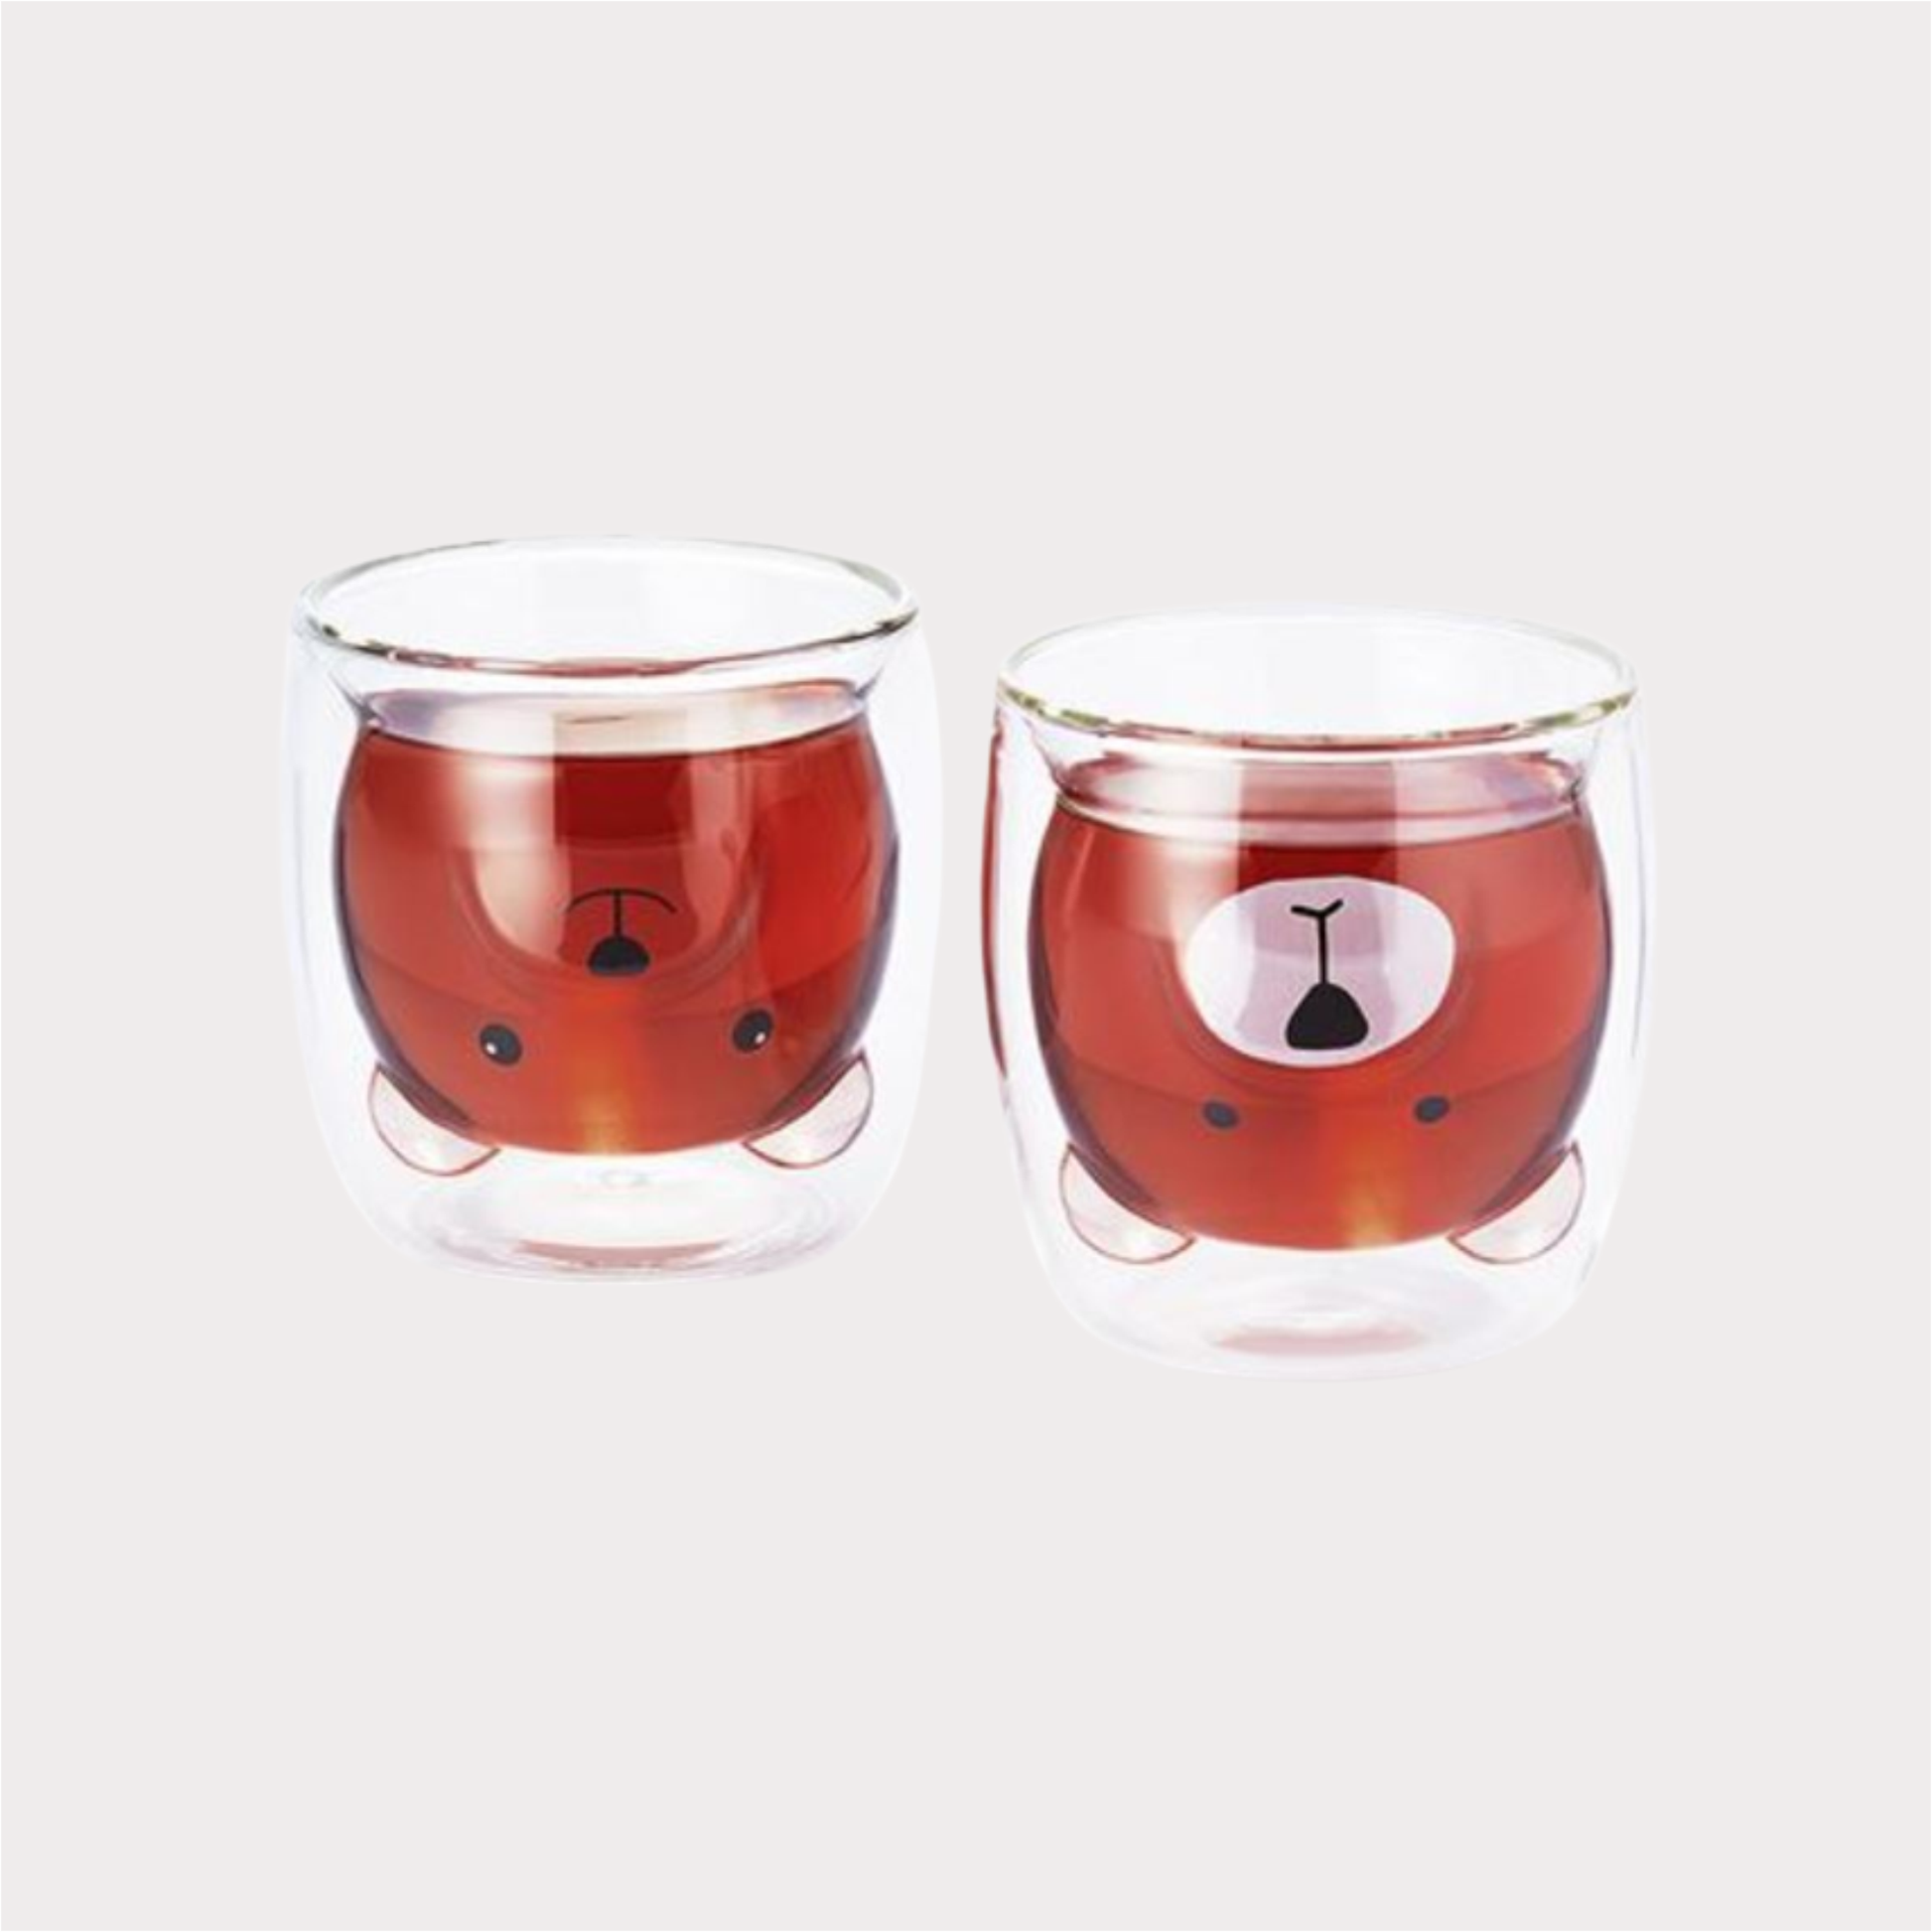 Glas „Pat" doppelwandiges Glas mit Bär-Motiven, 2-fach sortiert, 0,2 l